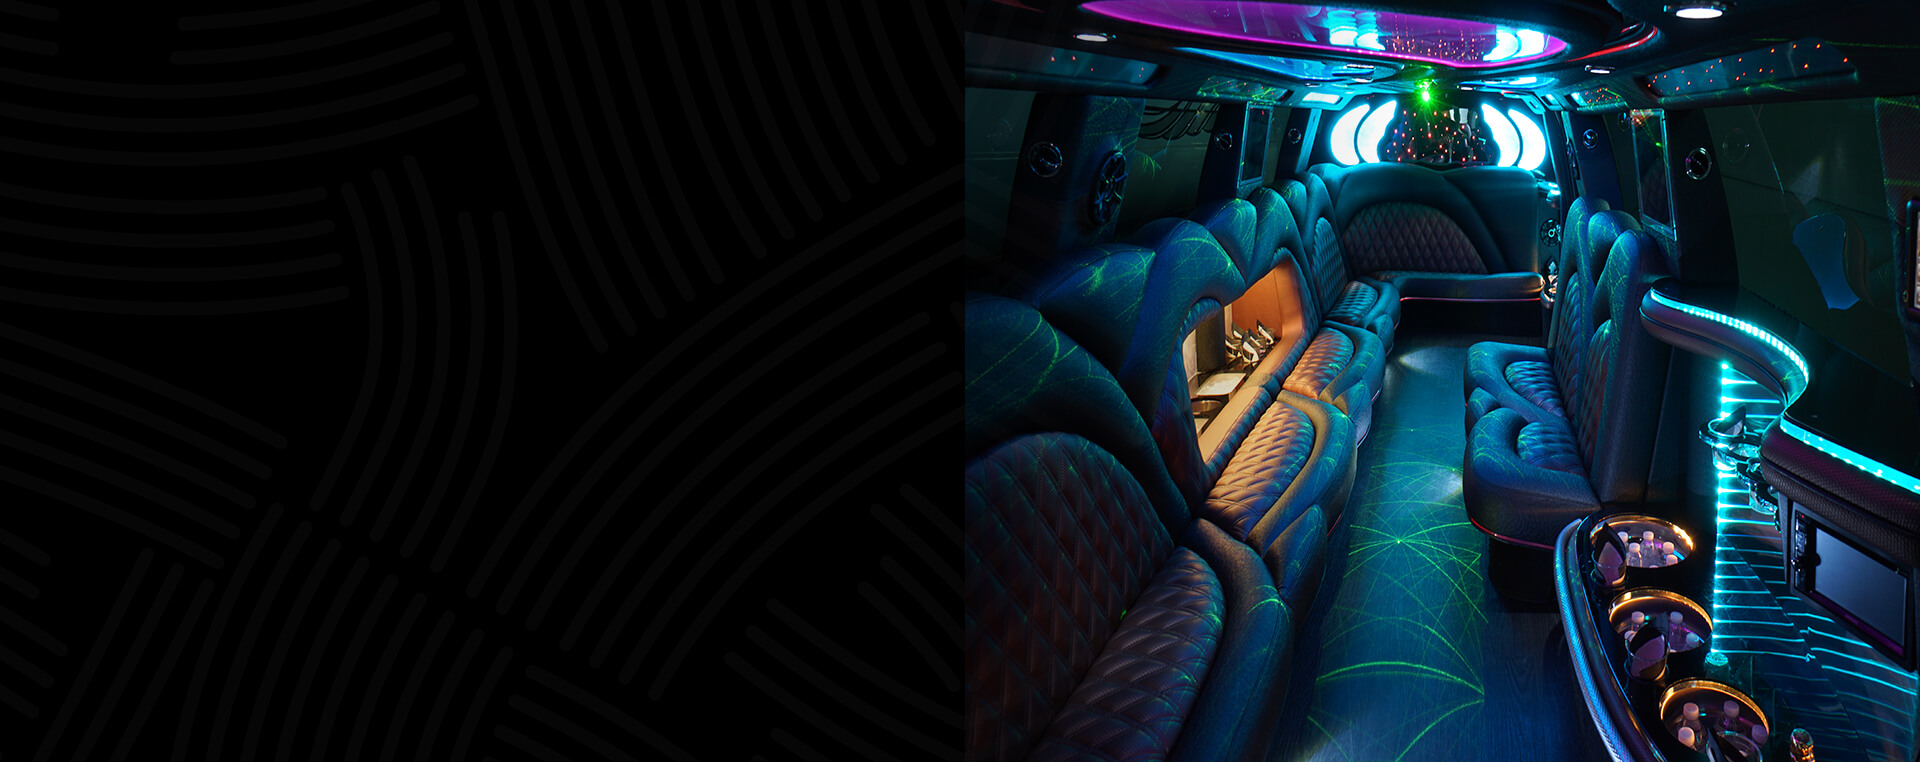 modern limo interior